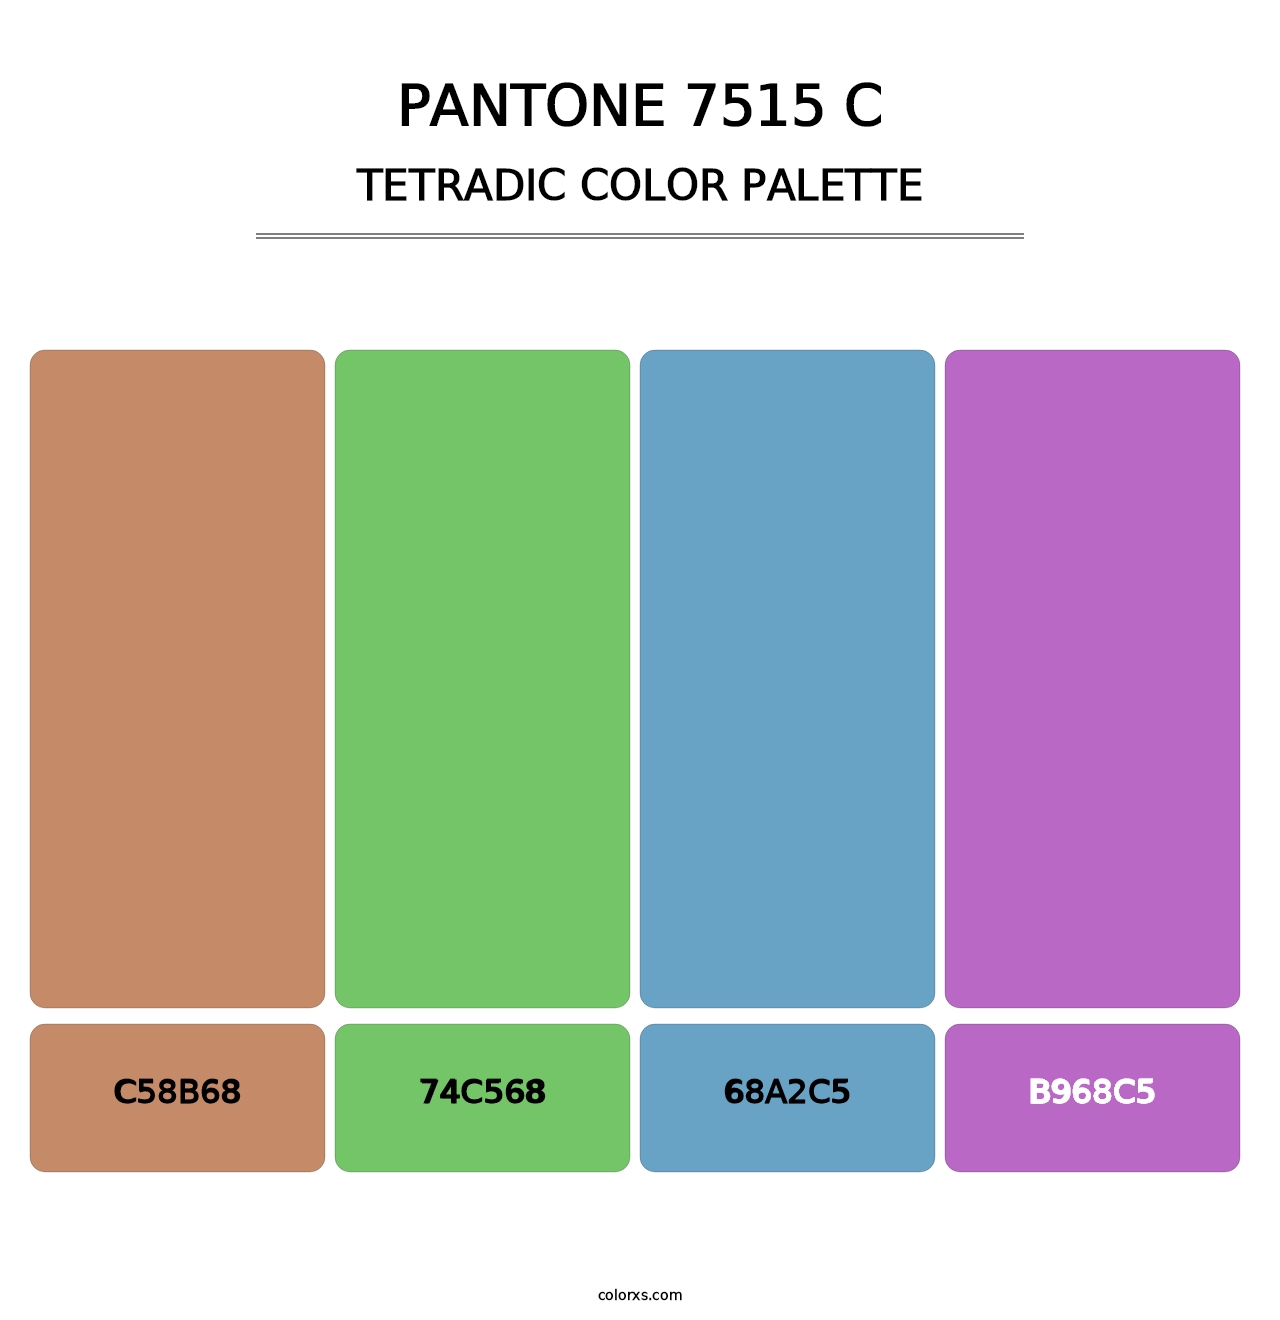 PANTONE 7515 C - Tetradic Color Palette